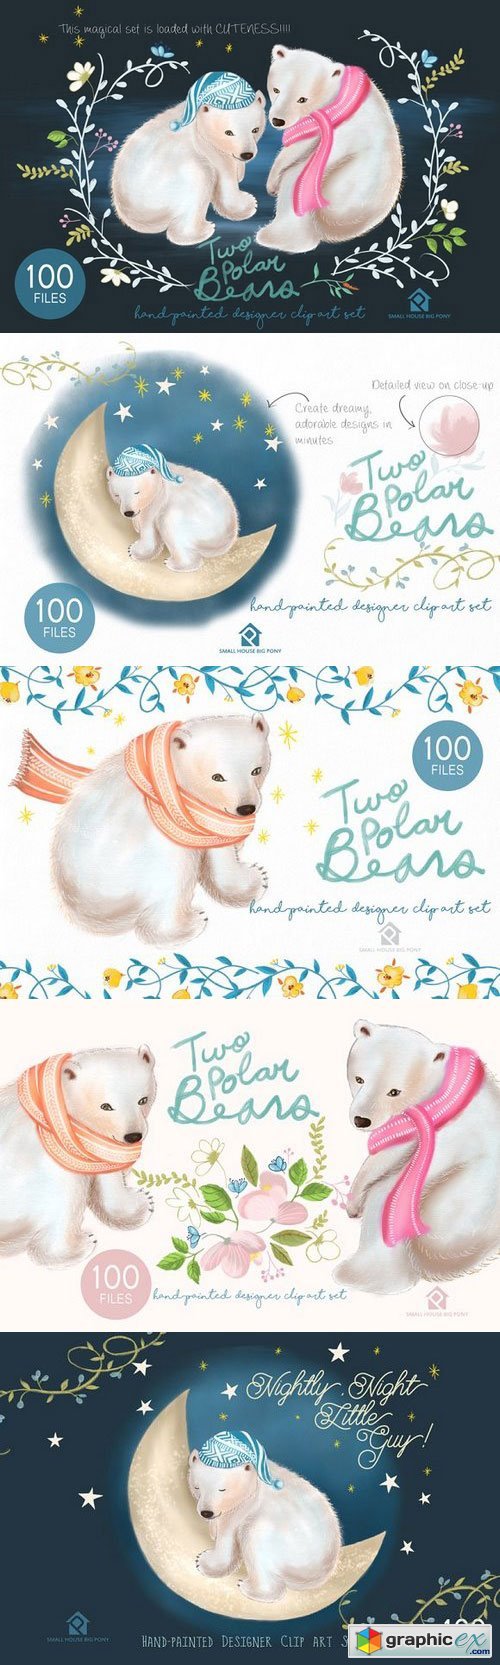 Two Polar Bears - Handpainted Design